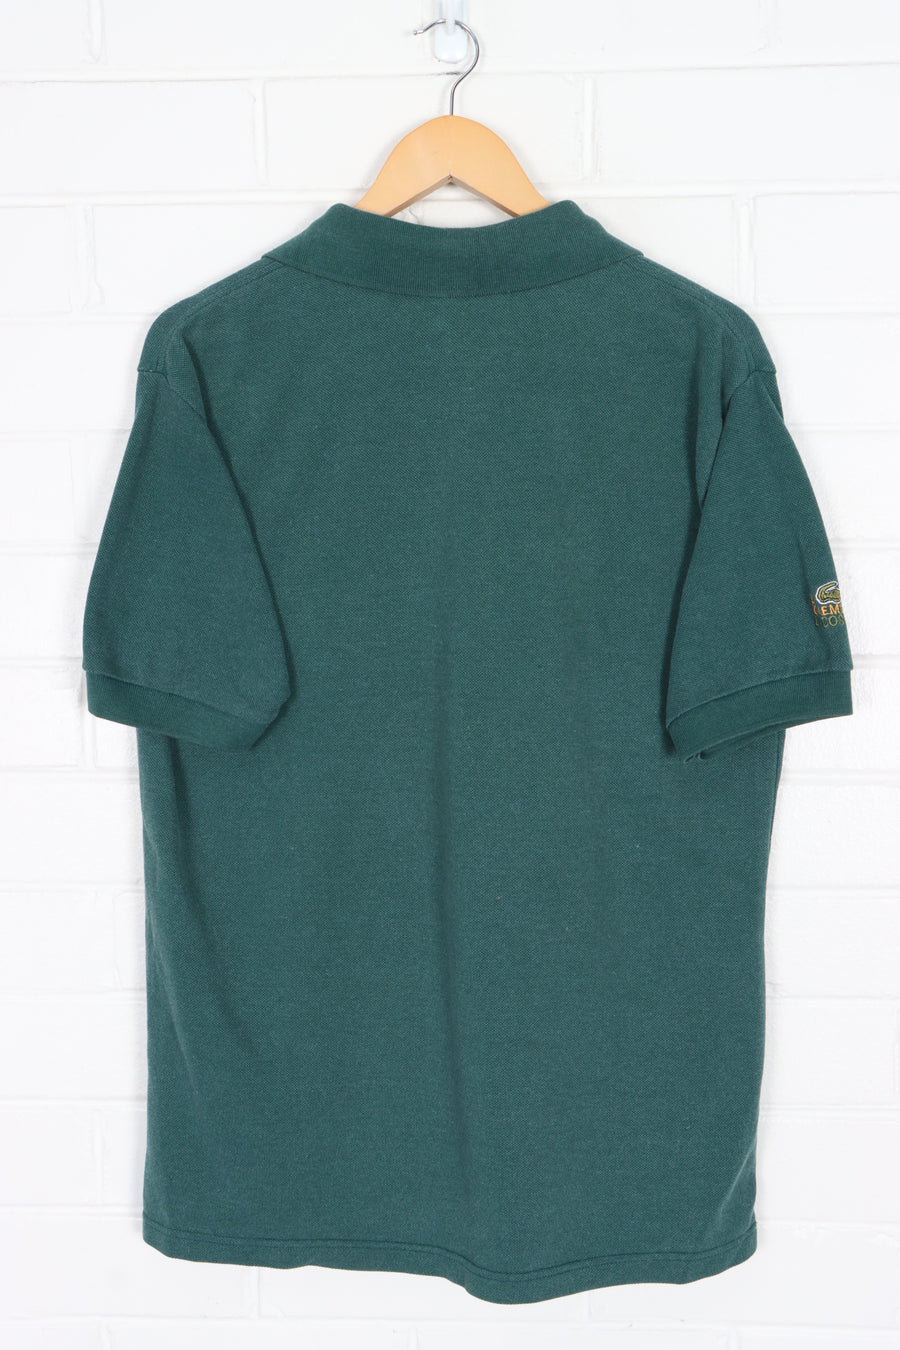 LACOSTE 'La Chemise' Double Logo Green Polo Shirt France Made (M-L)